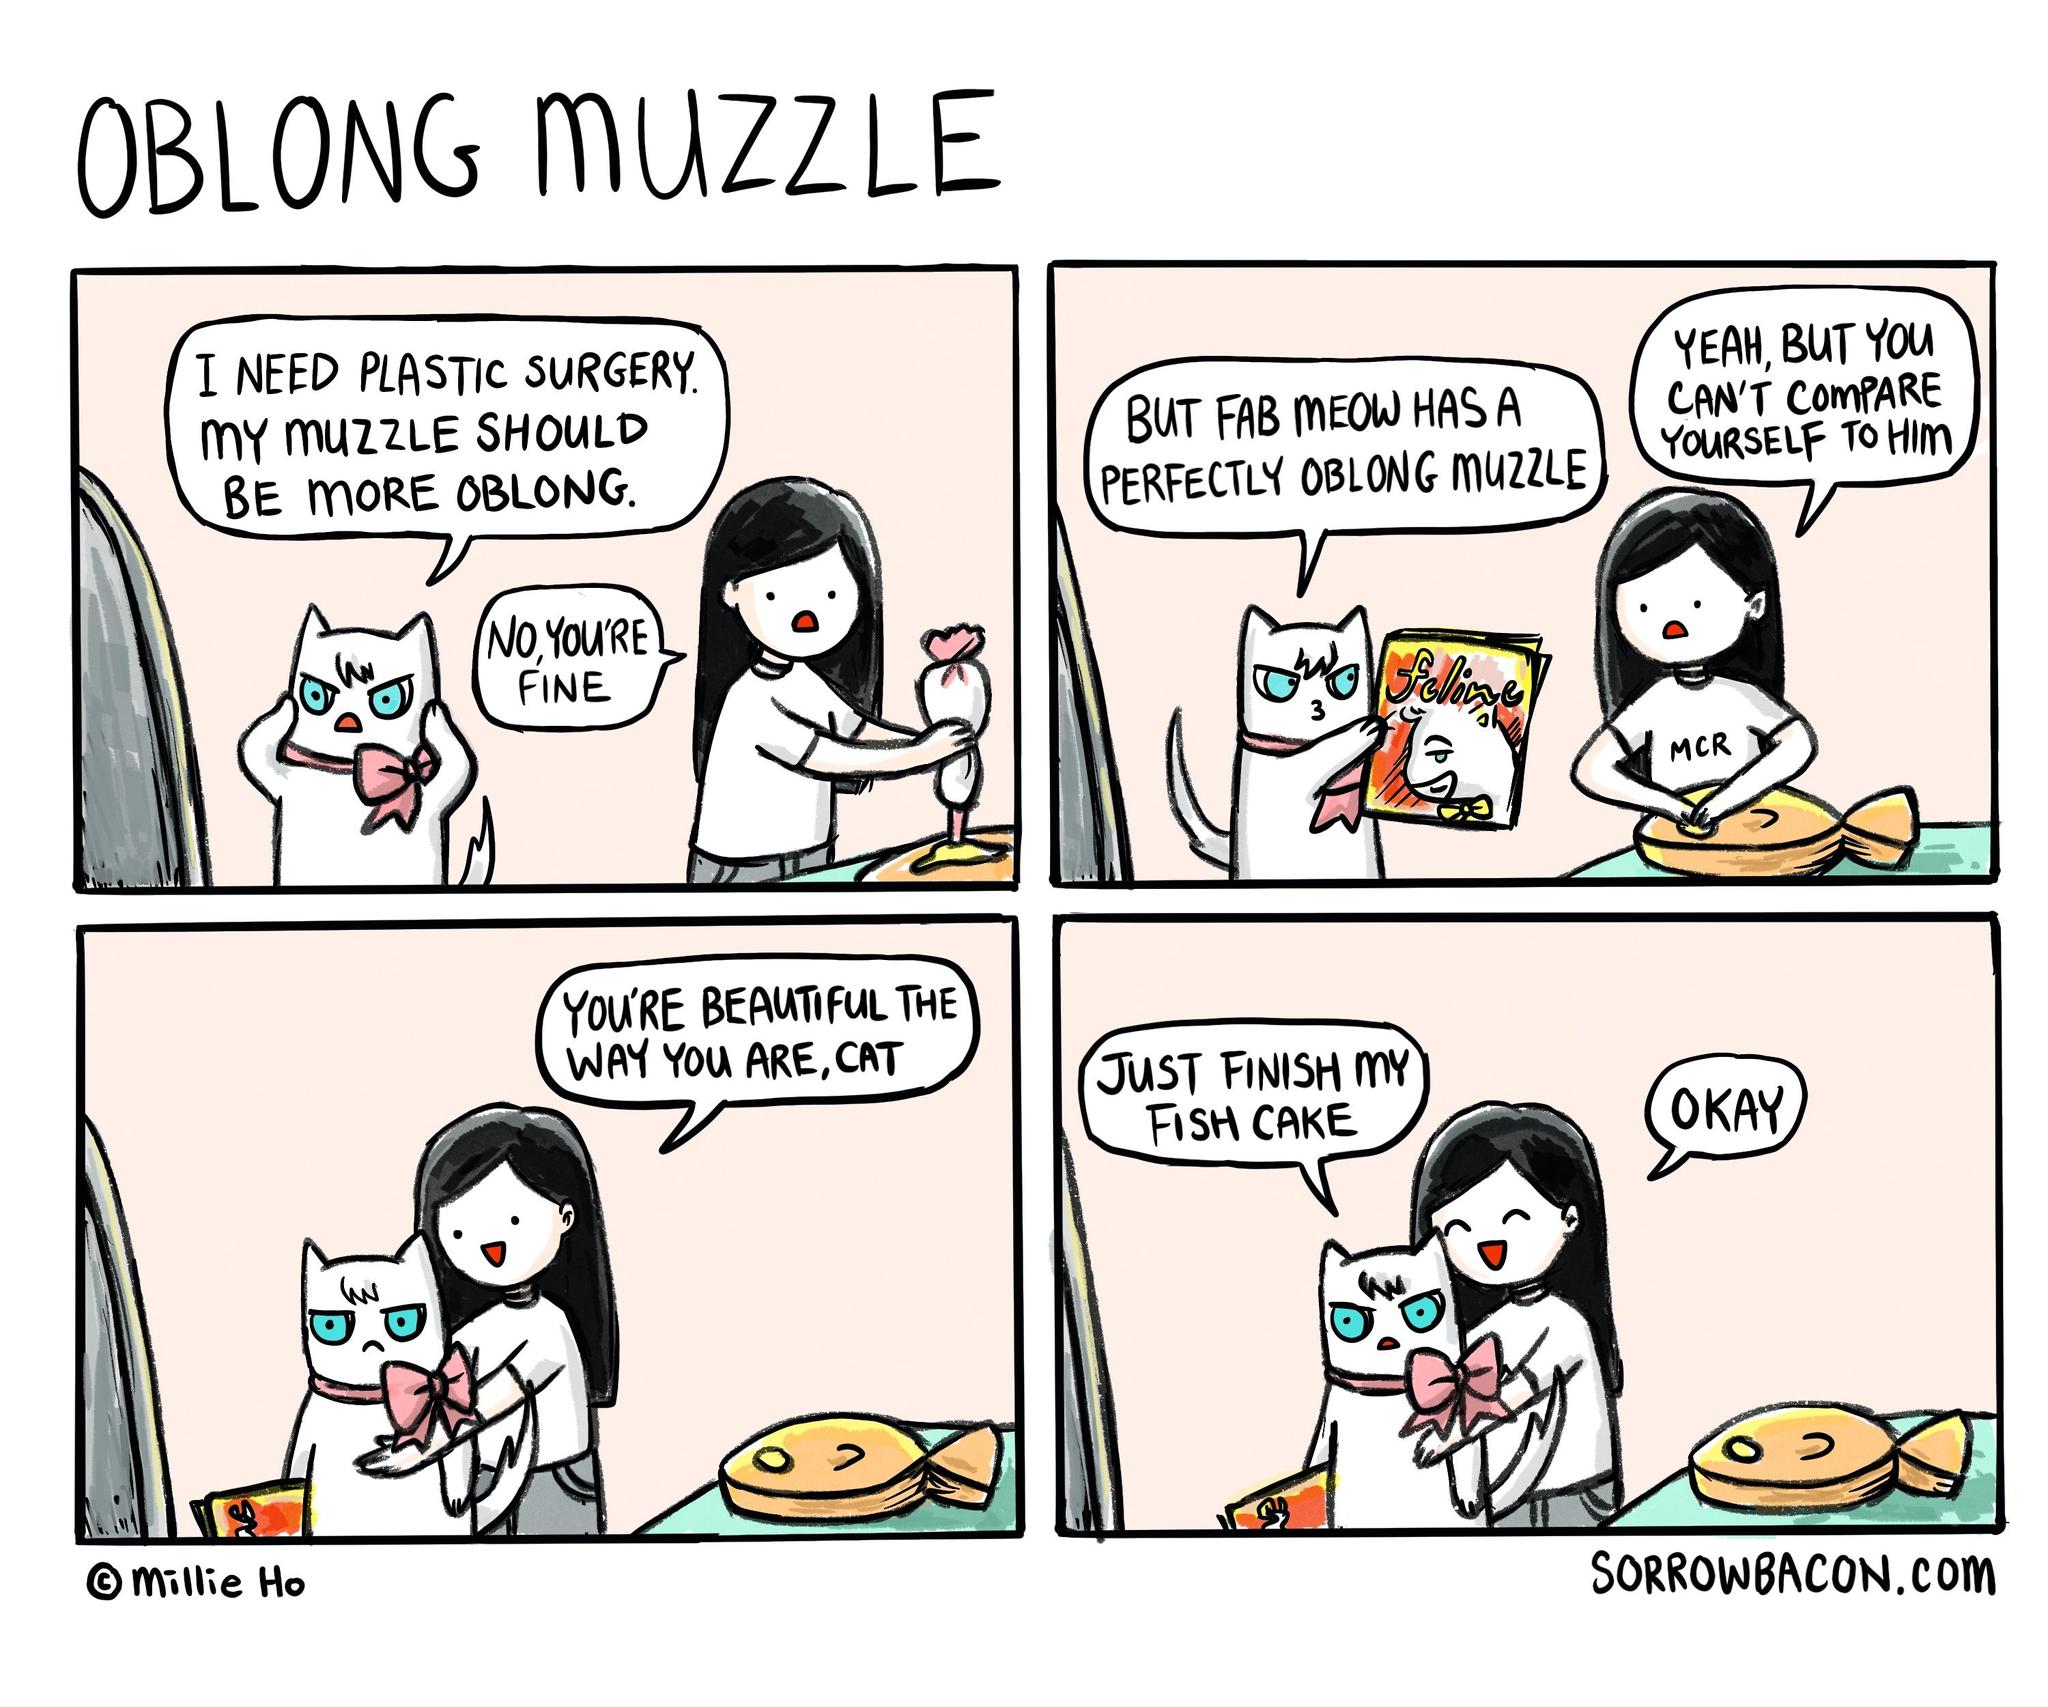 Oblong Muzzle sorrowbacon comic